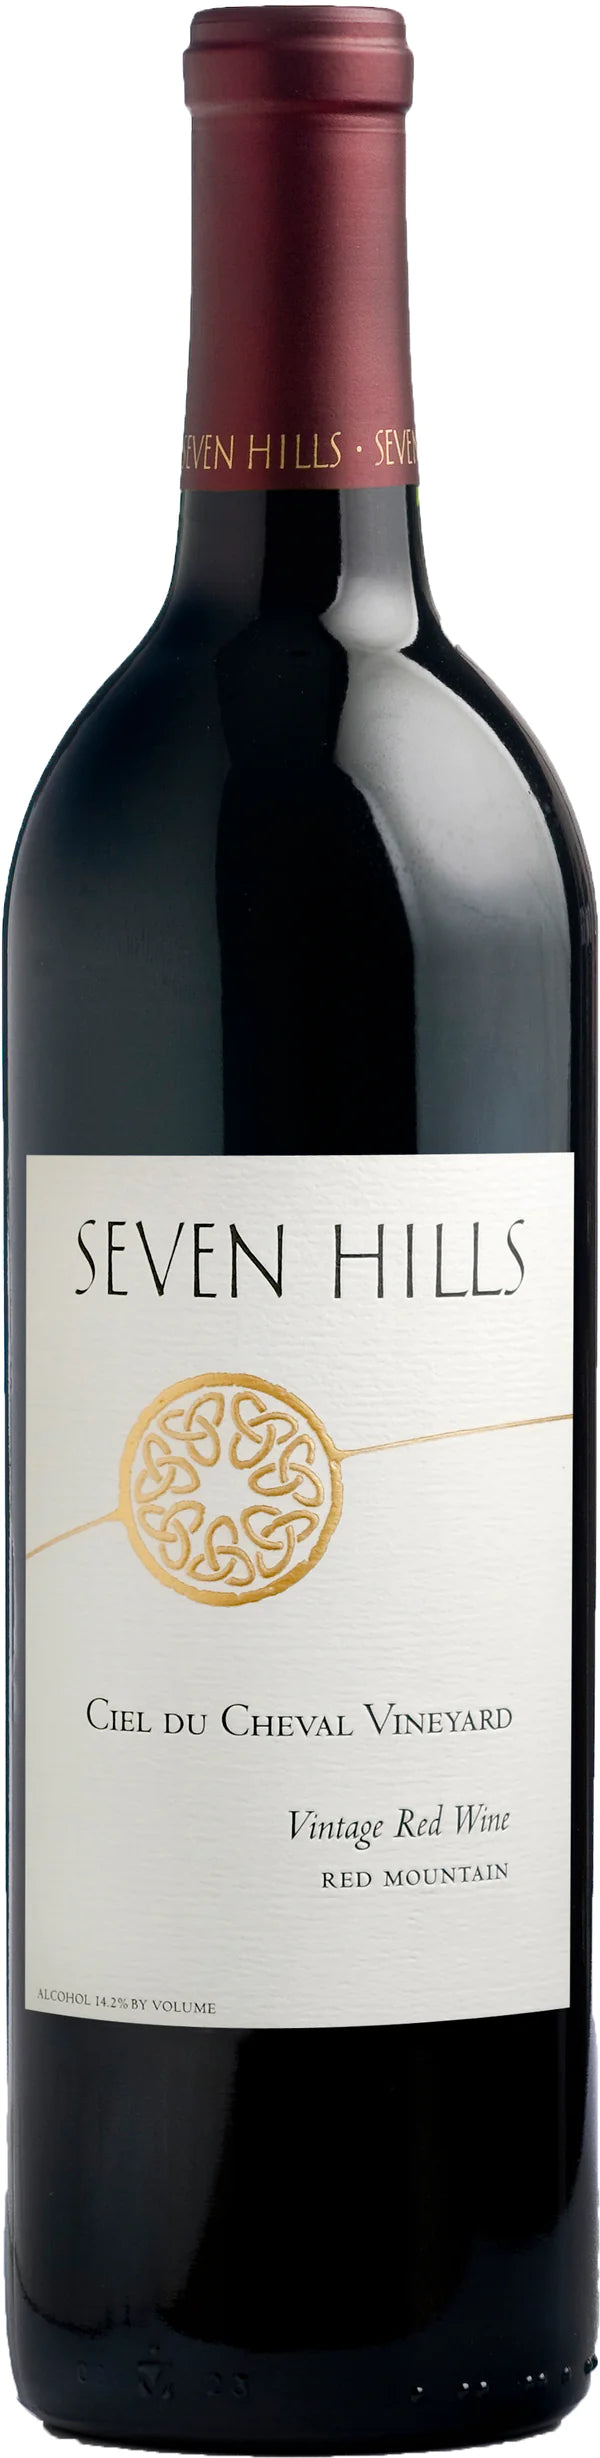 Seven Hills, Ciel de Cheval, Bordeaux Red Blend, Red Mountain, 2013 Wine Bottle Vineyard Cellars 